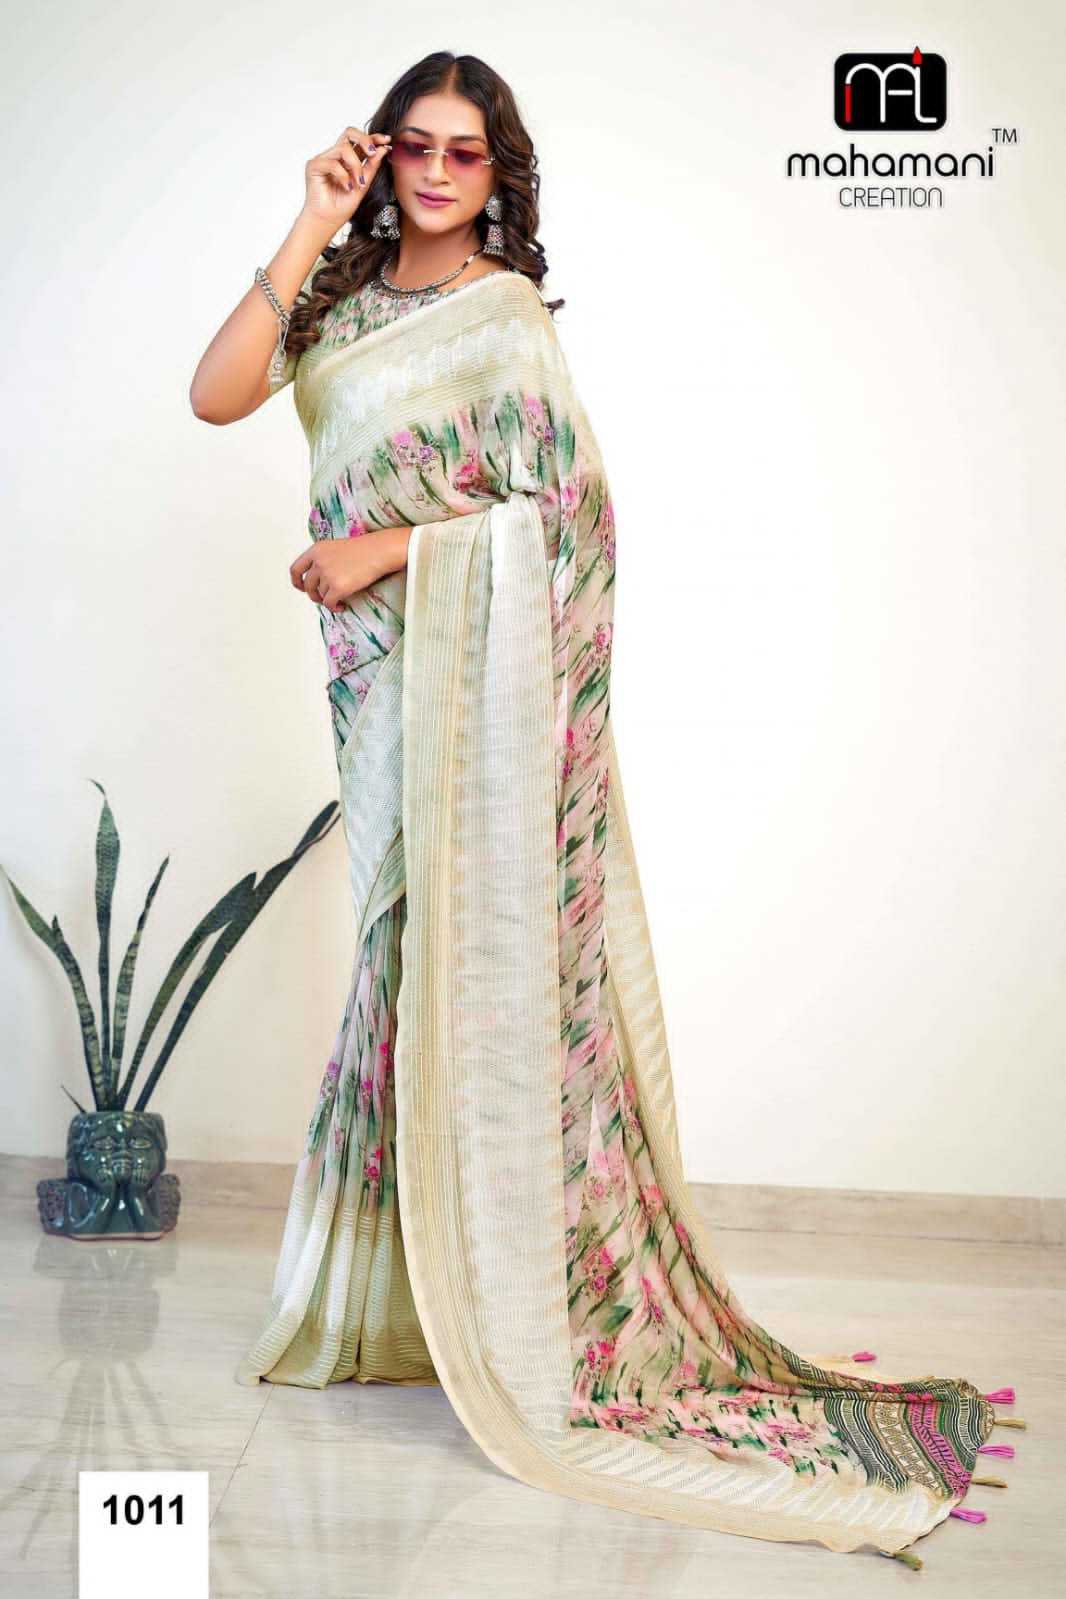 mahamani creation present albeli 1001-1025 weightless sarees new collection